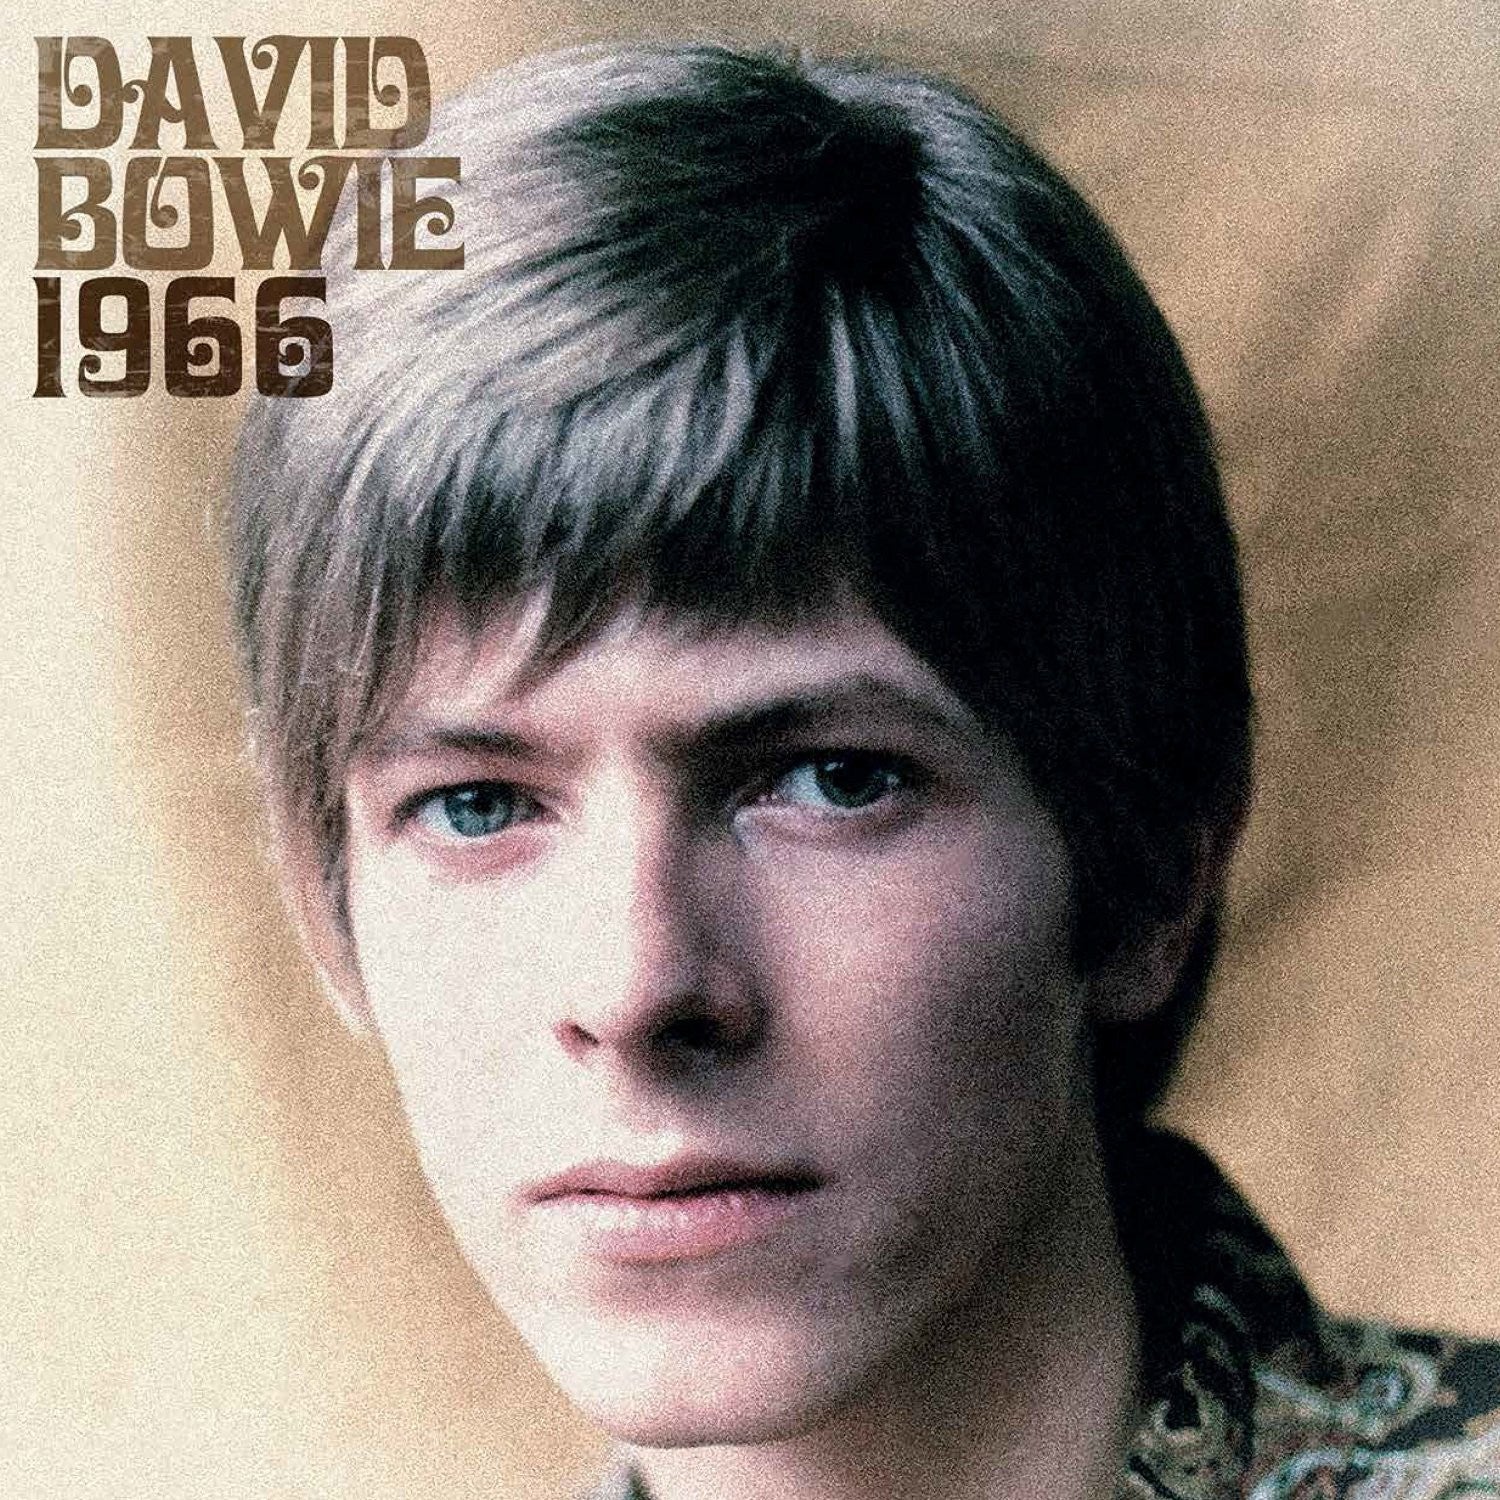 David Bowie - 1966  (Vinyl LP Record)